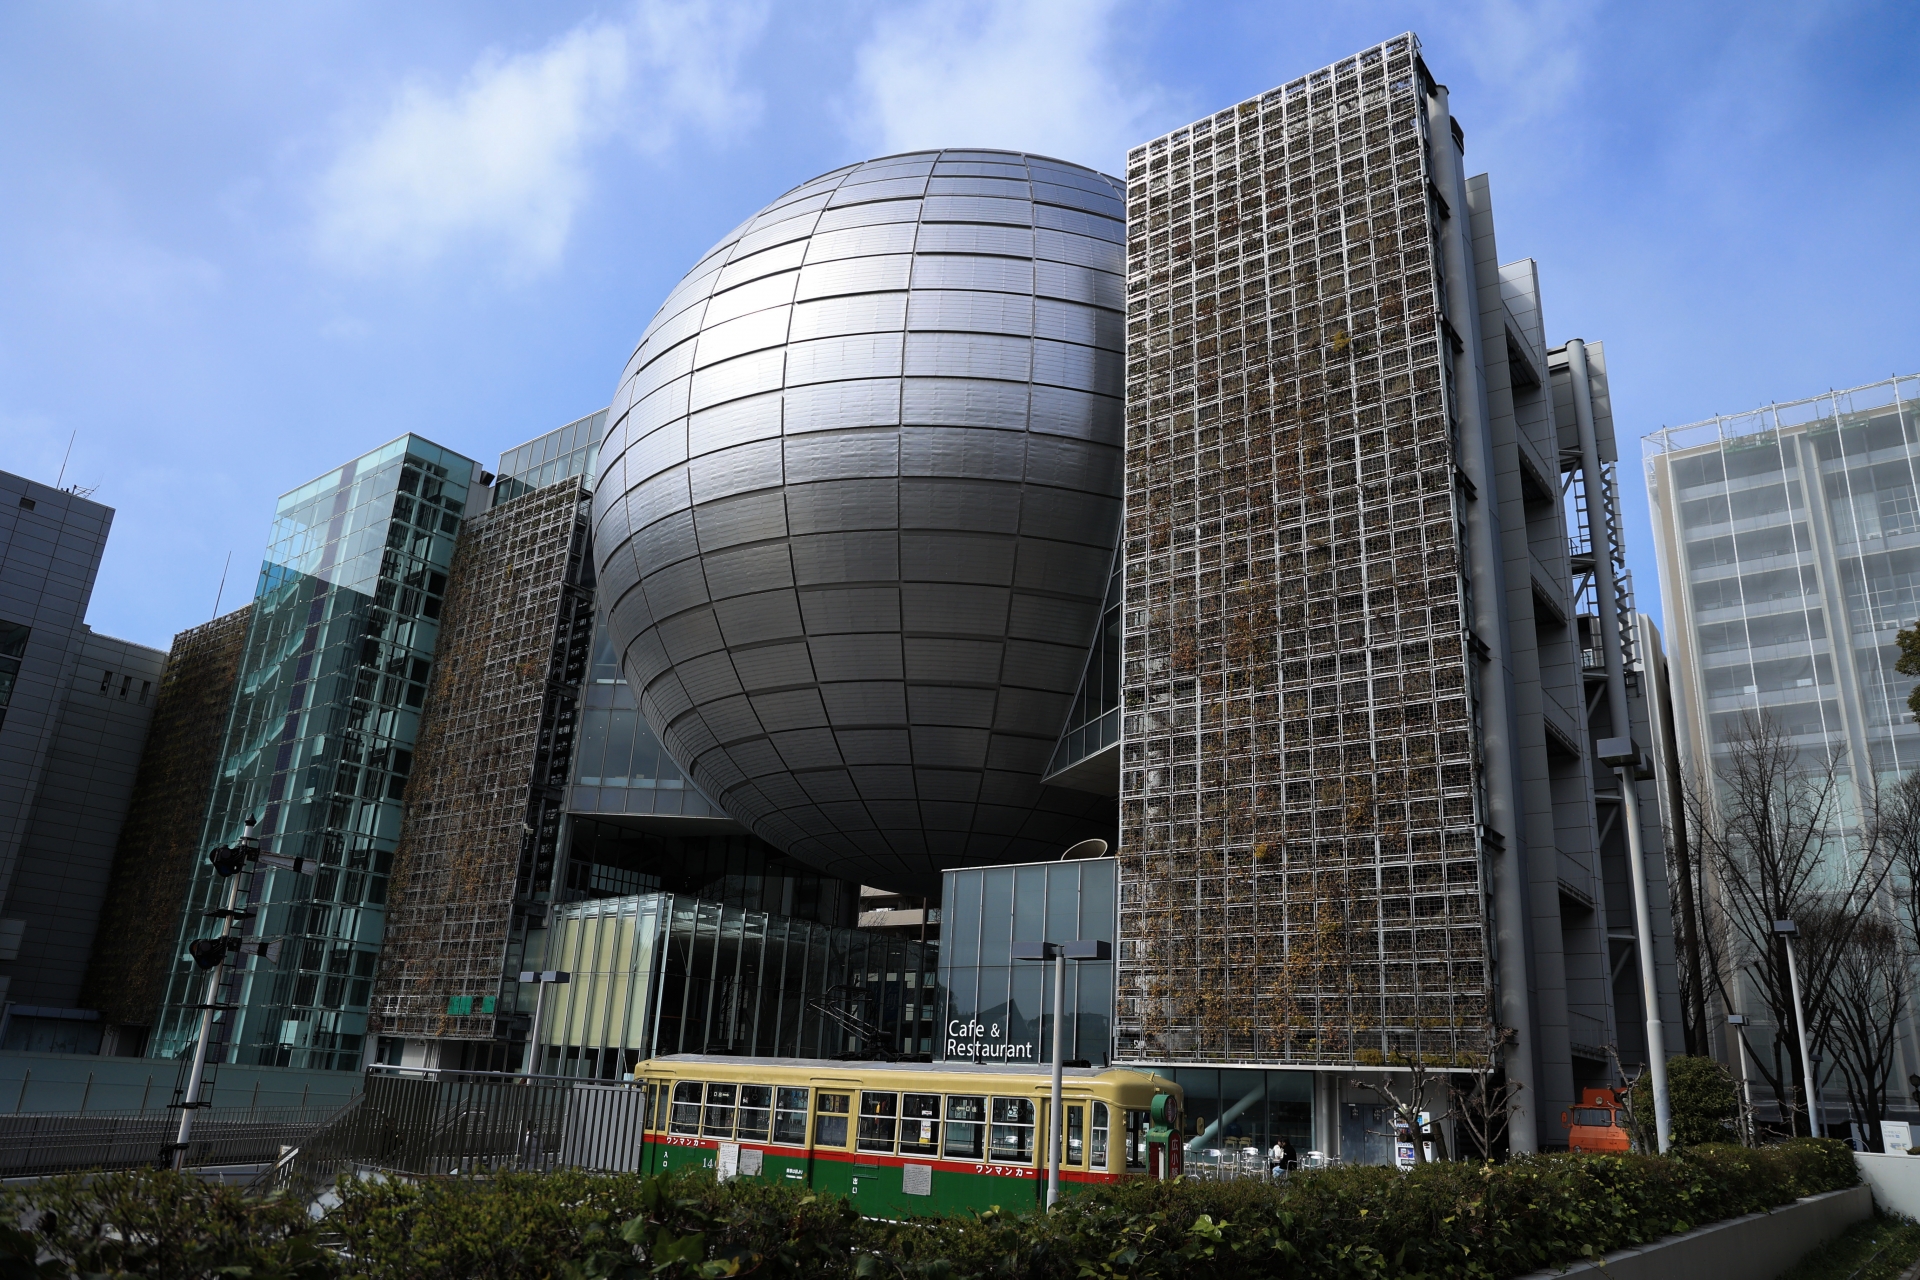 The world's largest planetarium in Nagoya, Japan